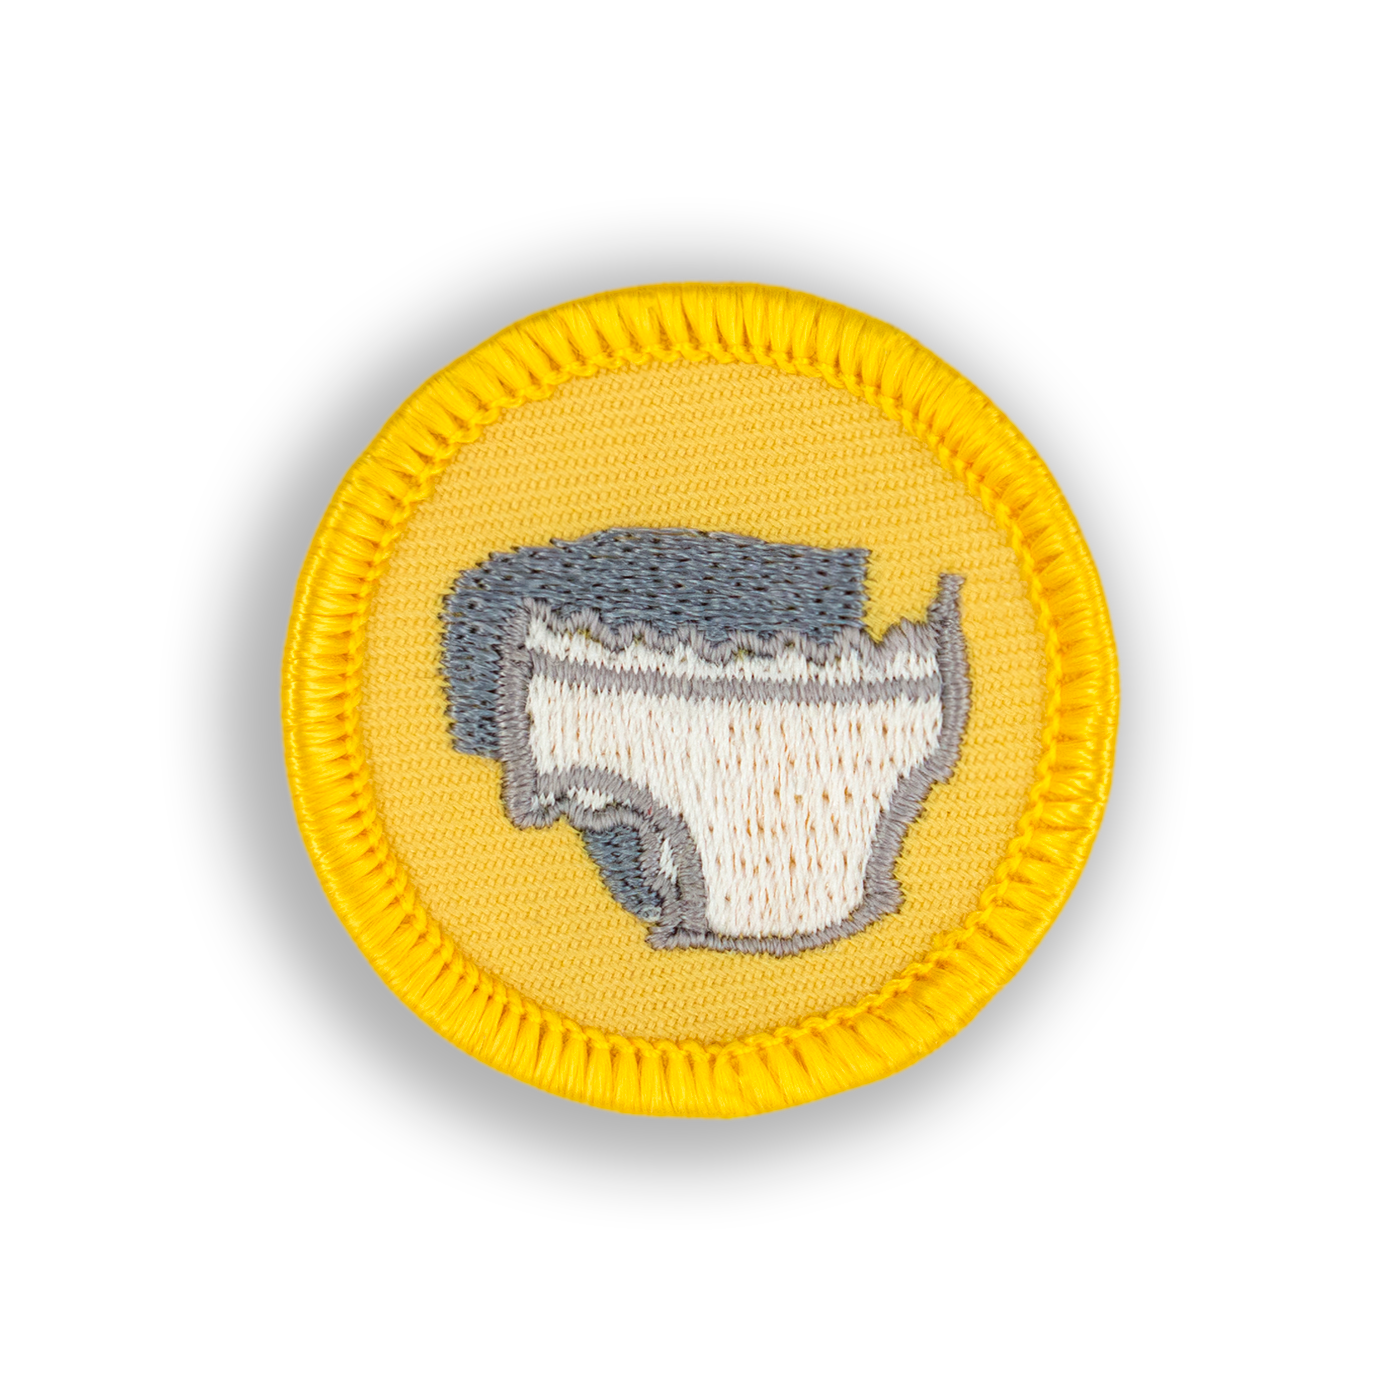 Diaper Patch | Demerit Wear - Fake Merit Badges